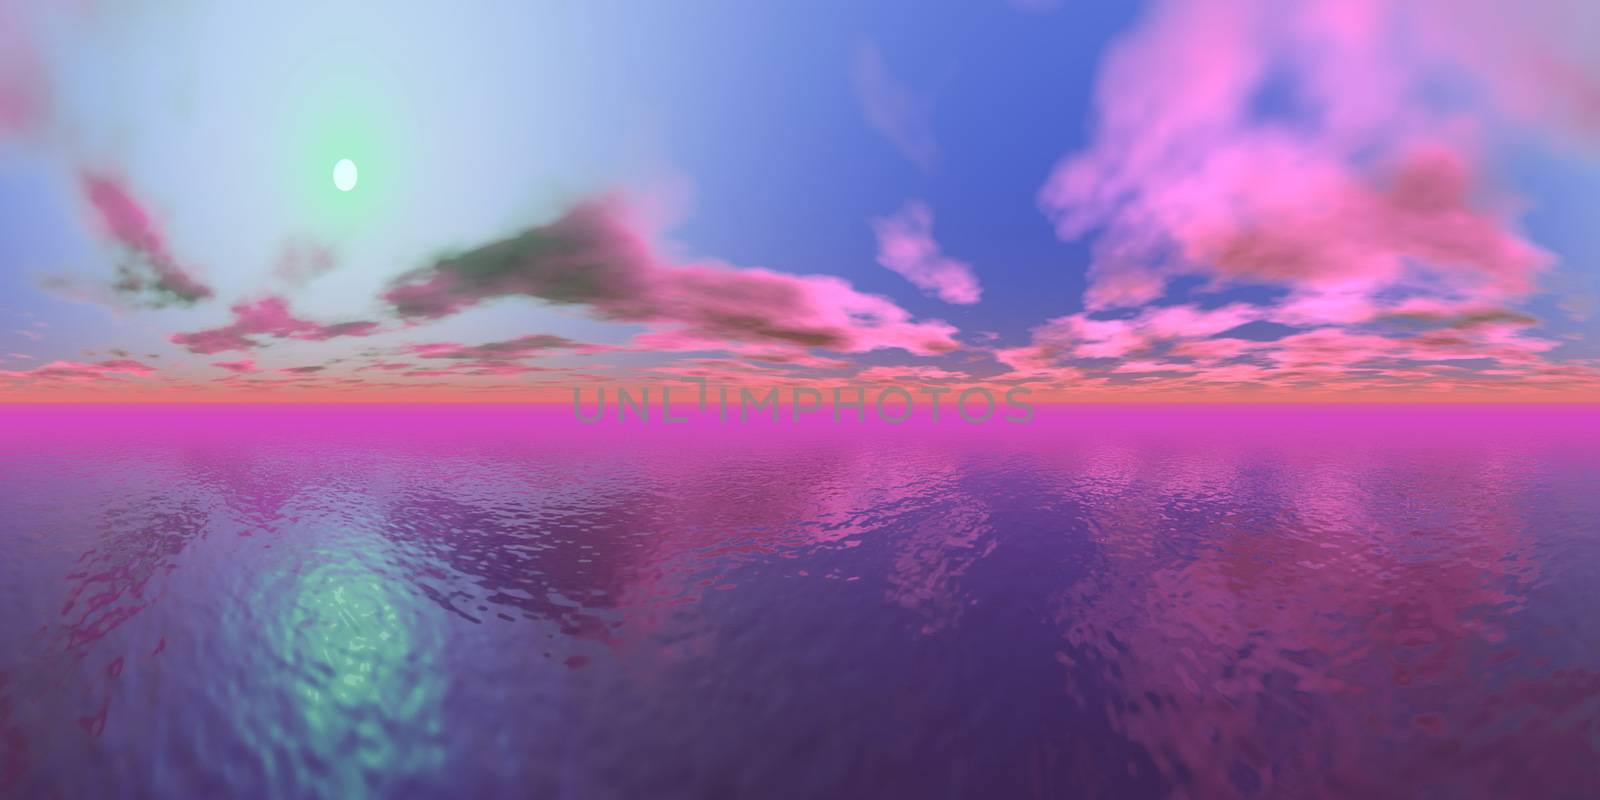 Sunset over ocean - 3D render by Elenaphotos21